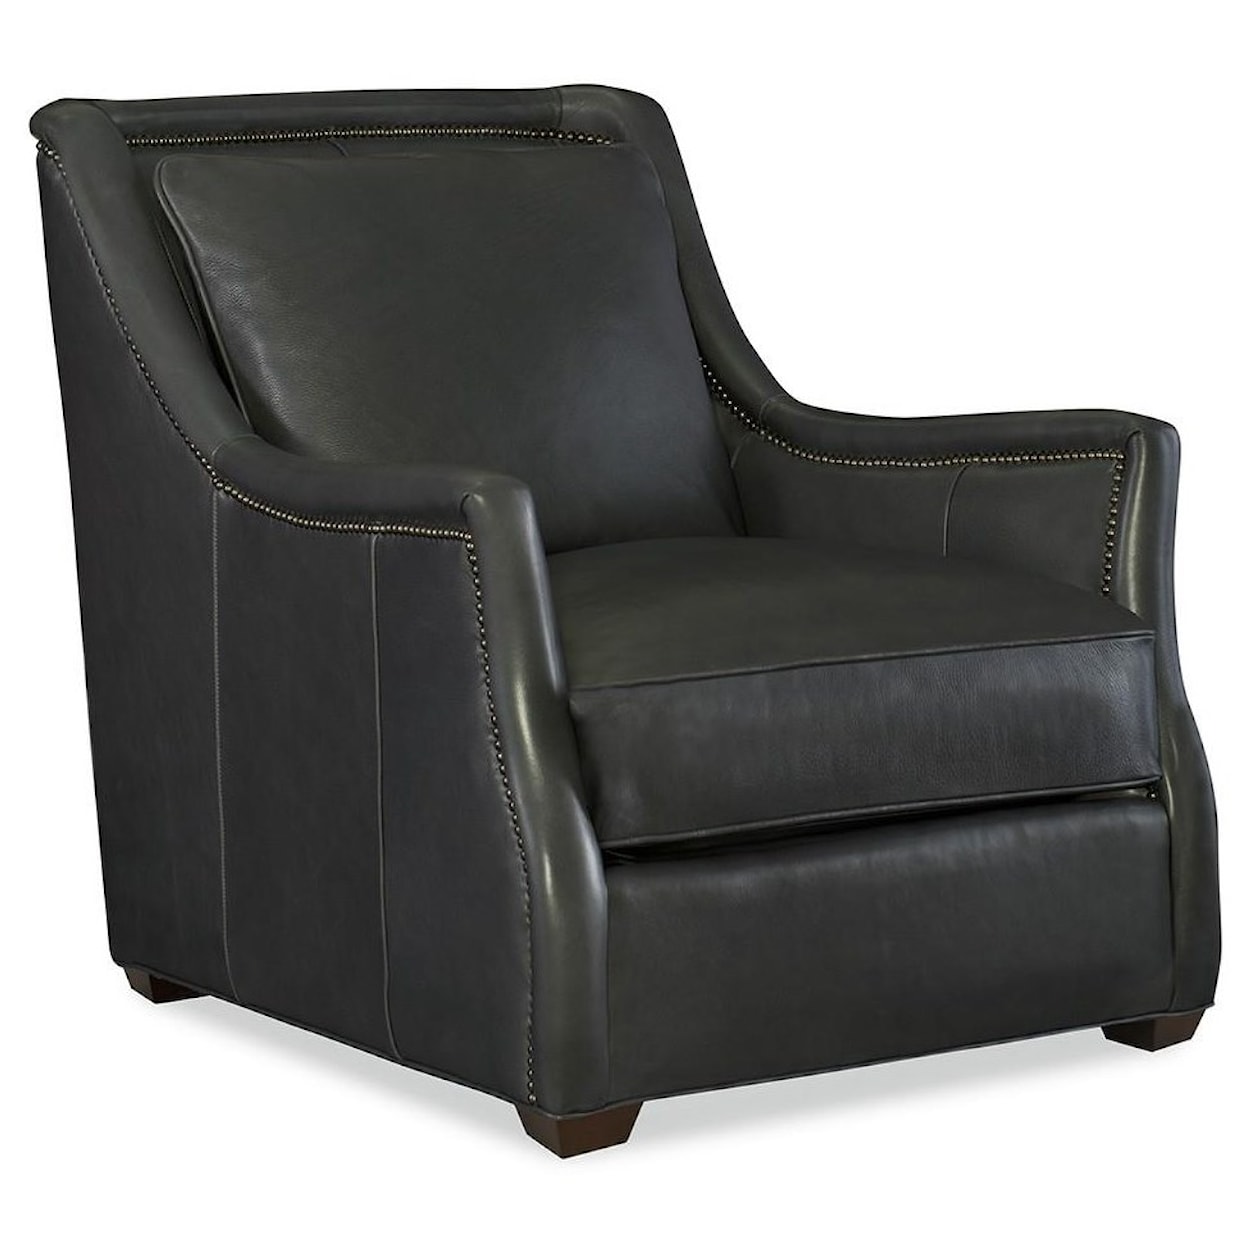 C.R. Laine Marcoux Marcoux Leather Chair